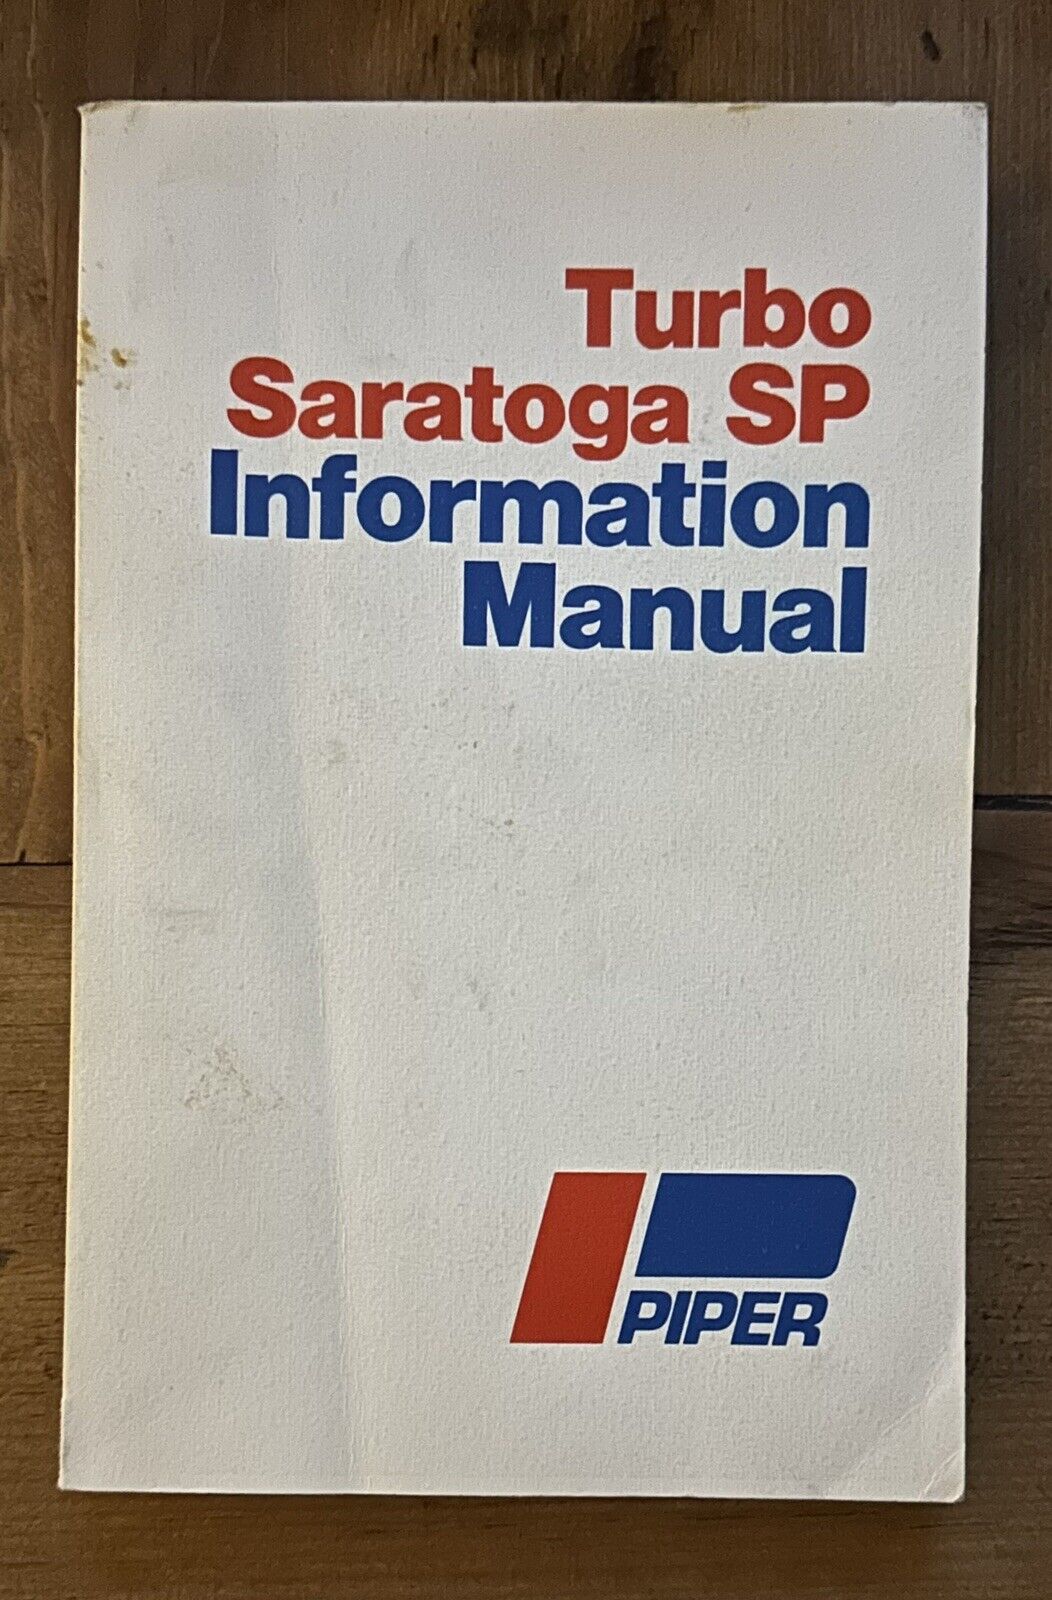 Vintage Aviation Manual: Piper Turbo Saratoga Information Manual 1980